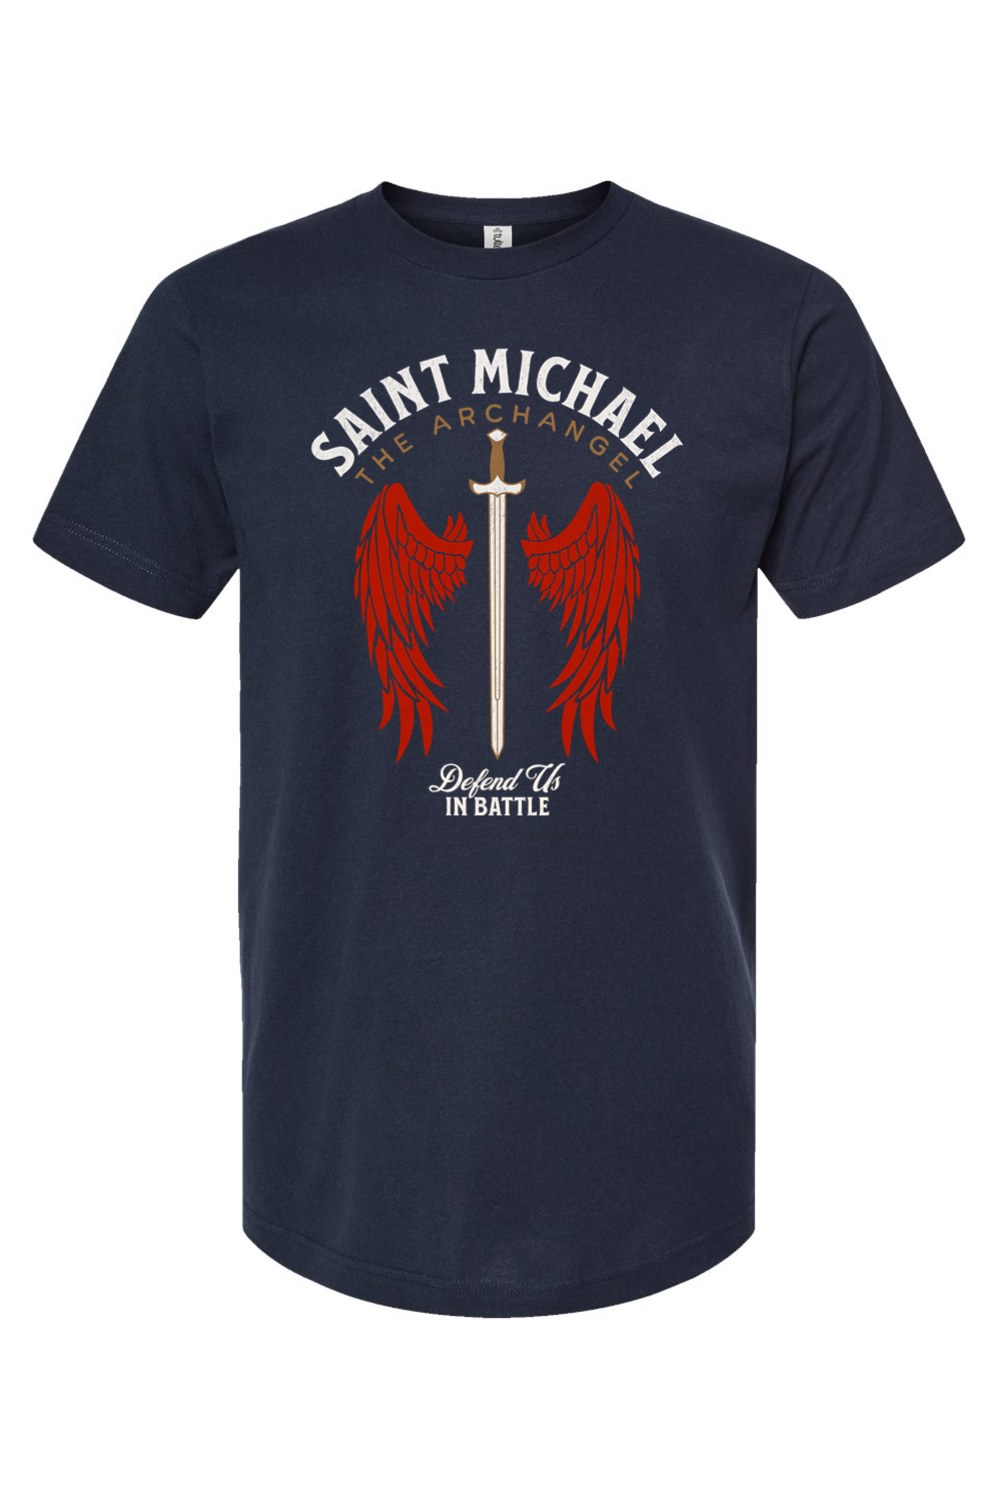 St. Michael - Defend Us In Battle - T-Shirt